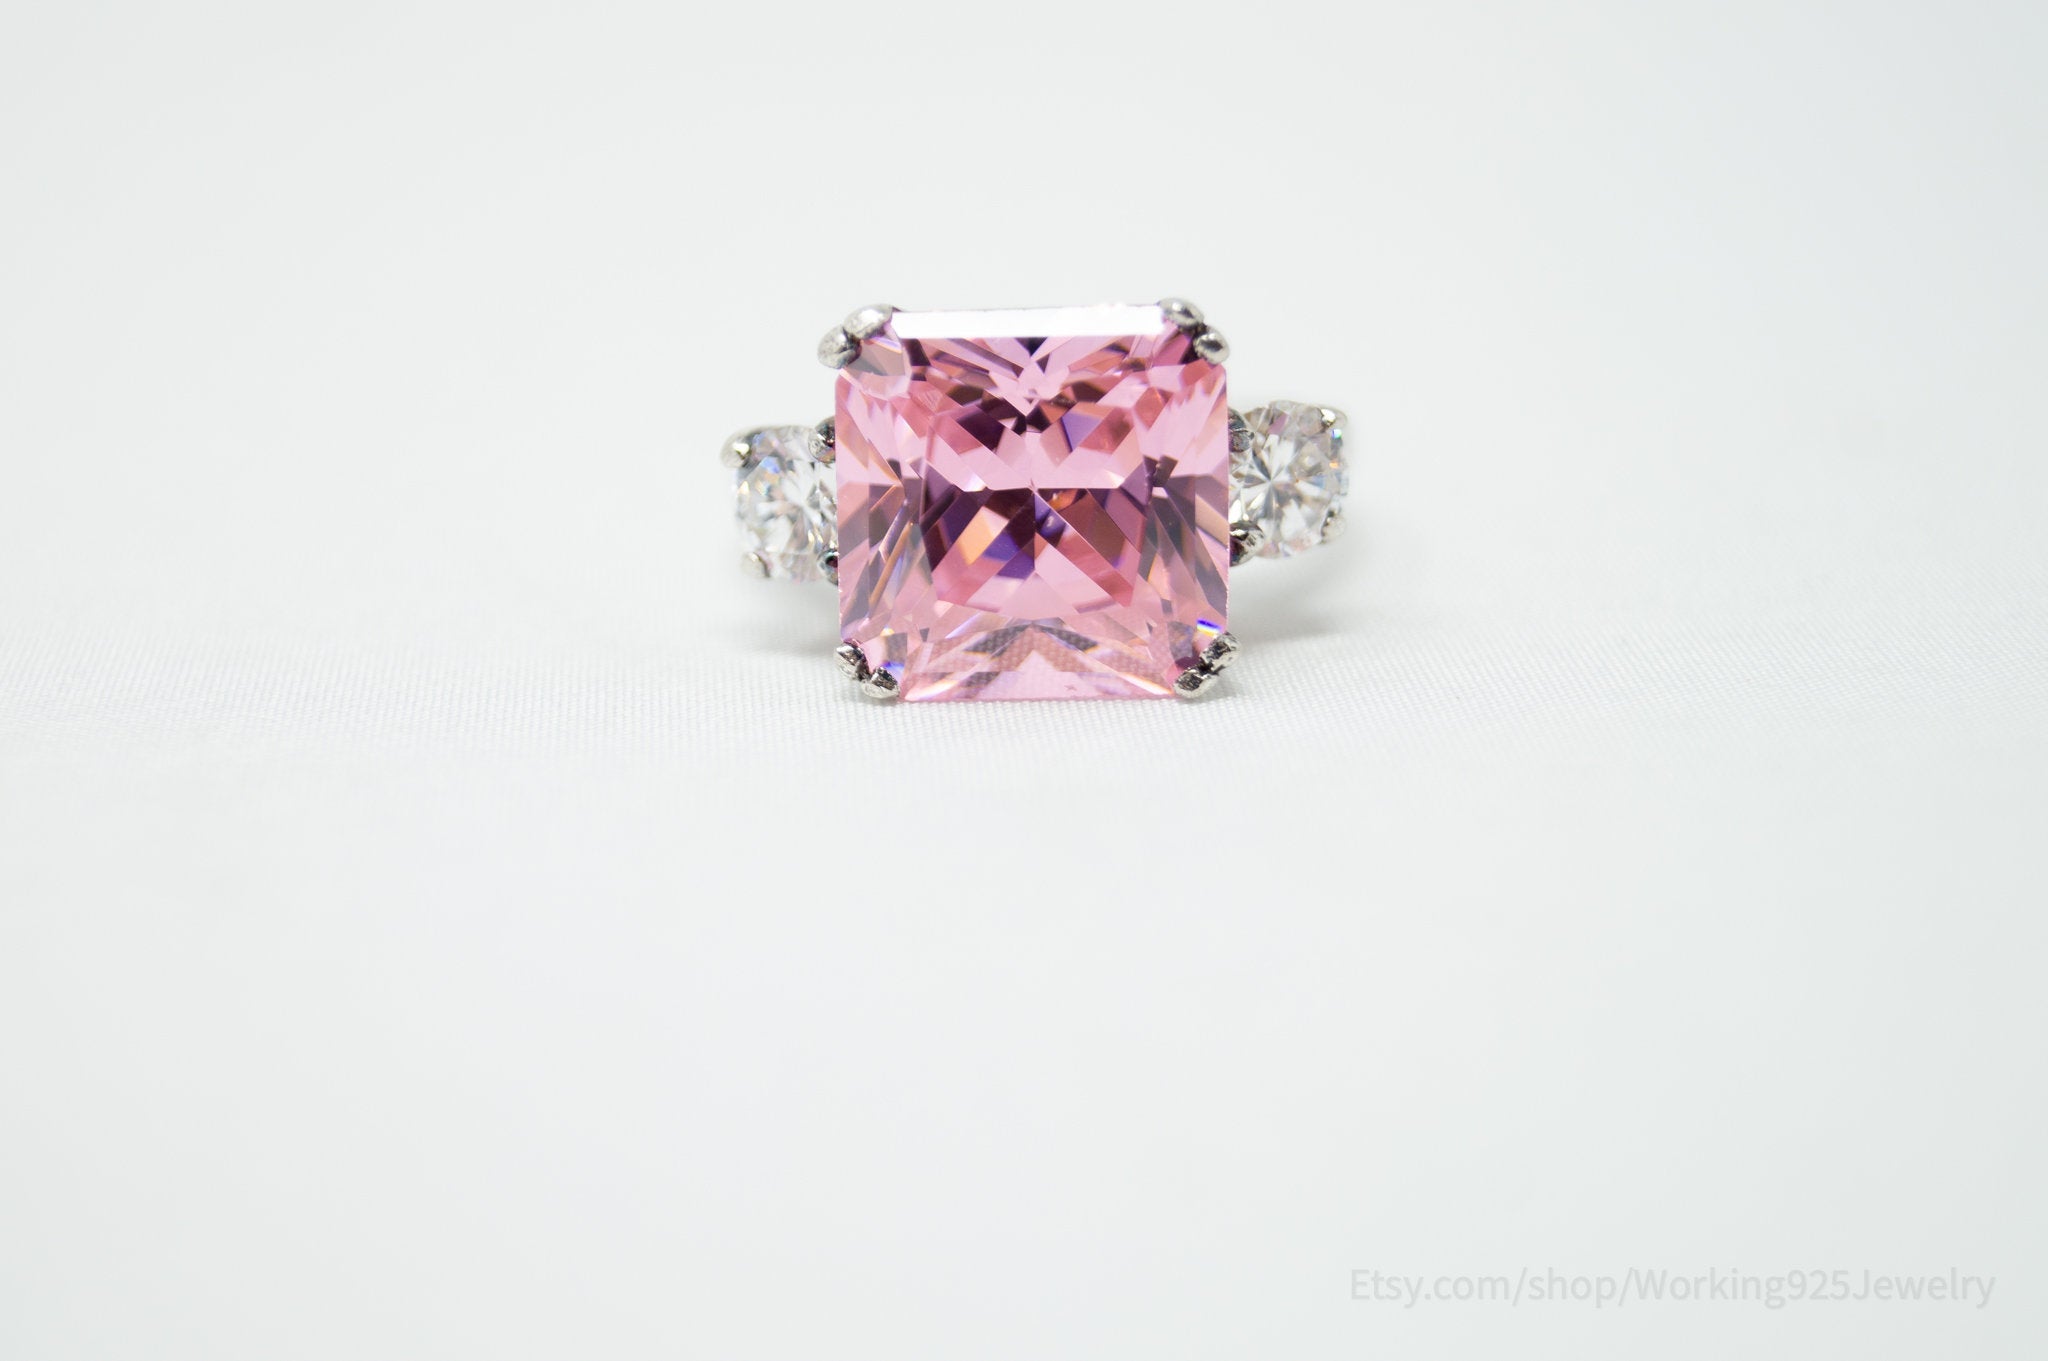 Vintage Art Deco Style Pink Topaz CZ Statement Ring Sterling Silver - Size 7.5